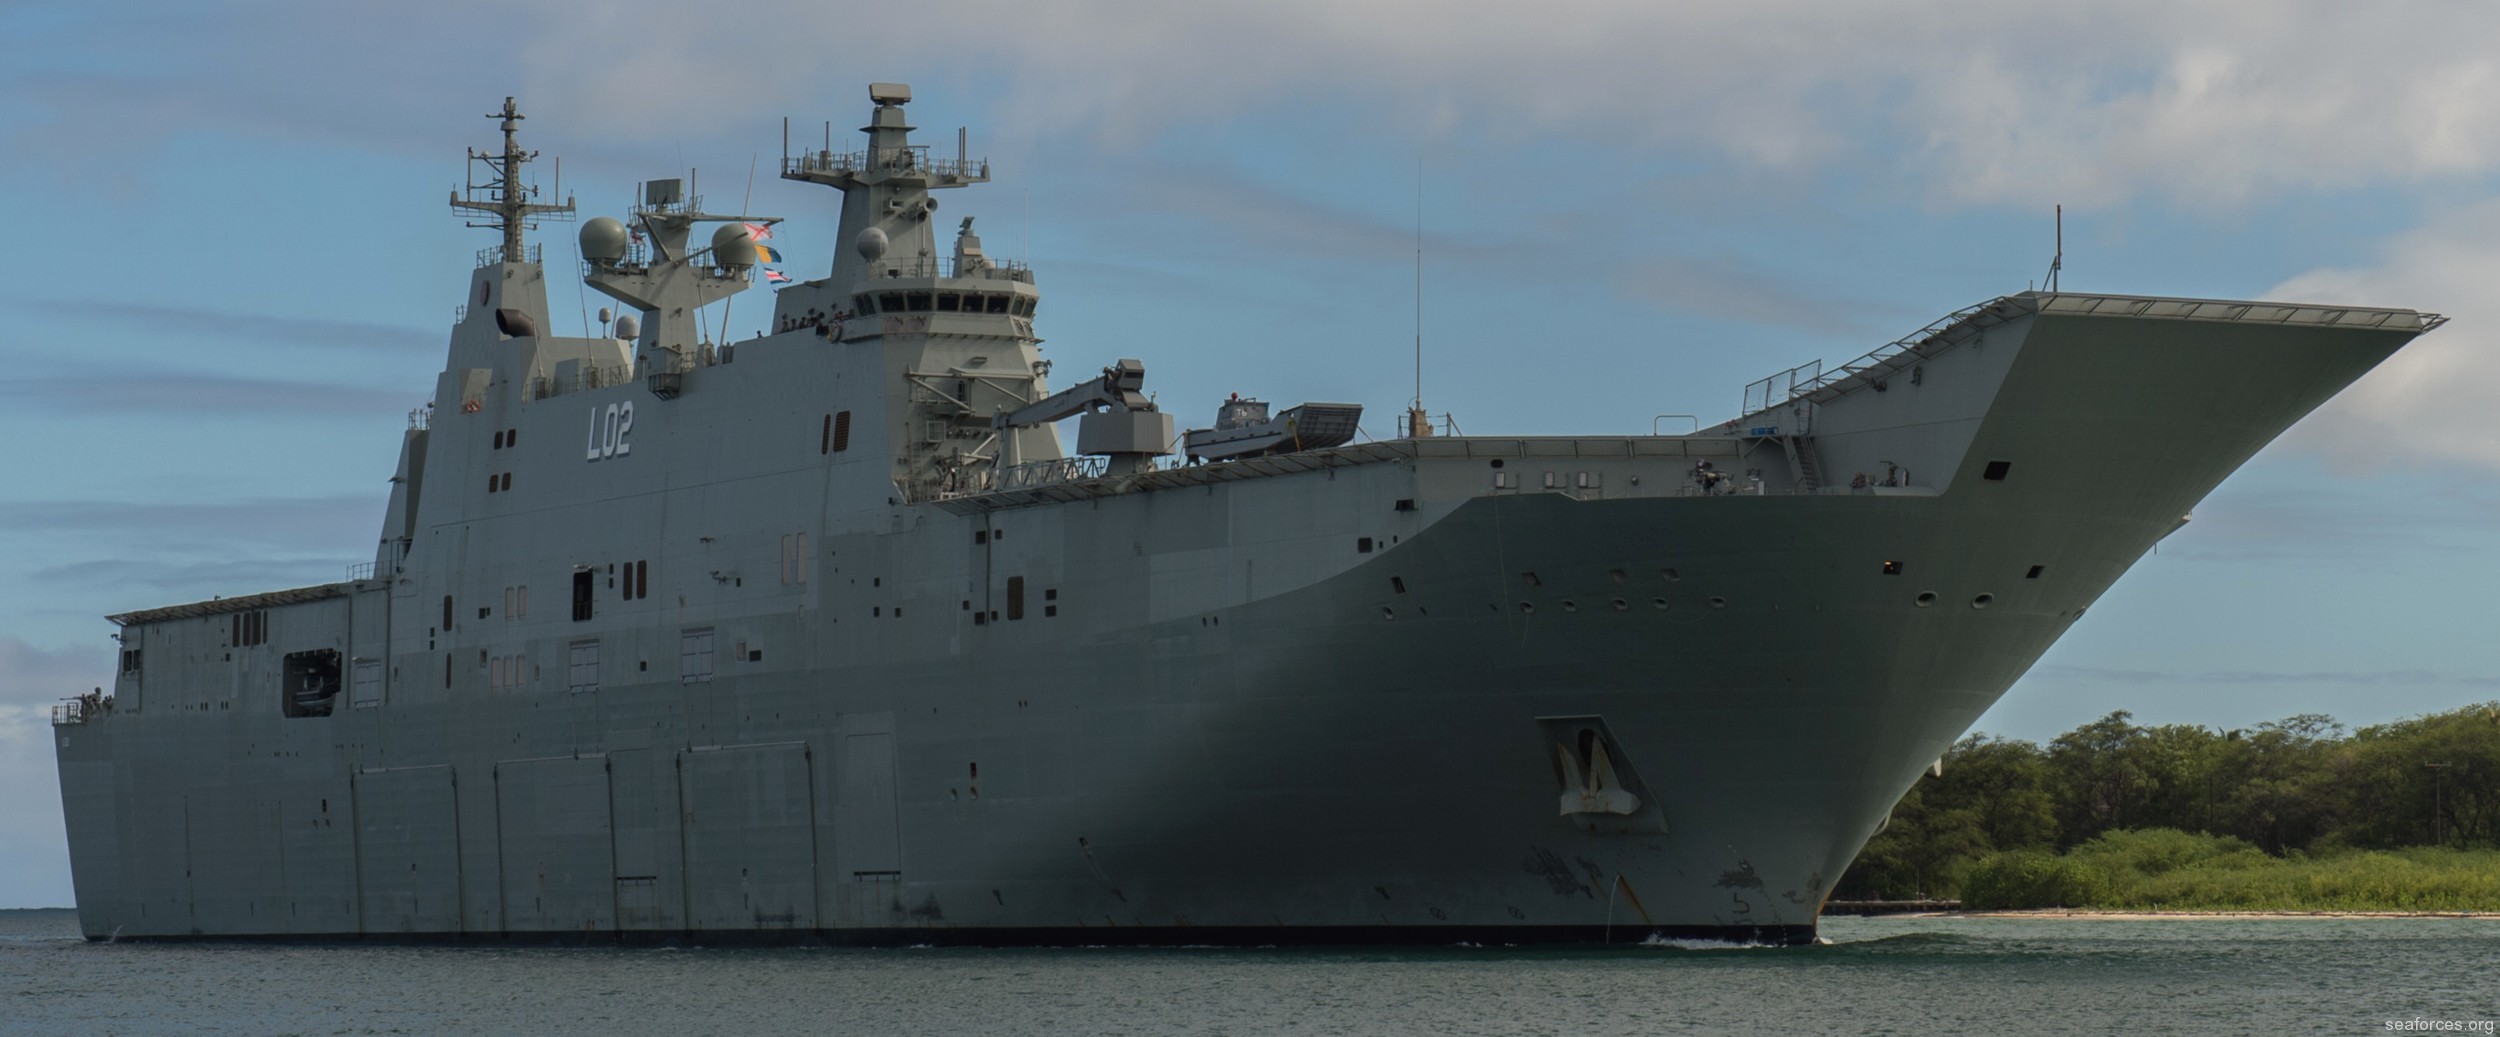 l-01 hmas canberra amphibious landing ship helicopter dock lhd royal australian navy 2016 20